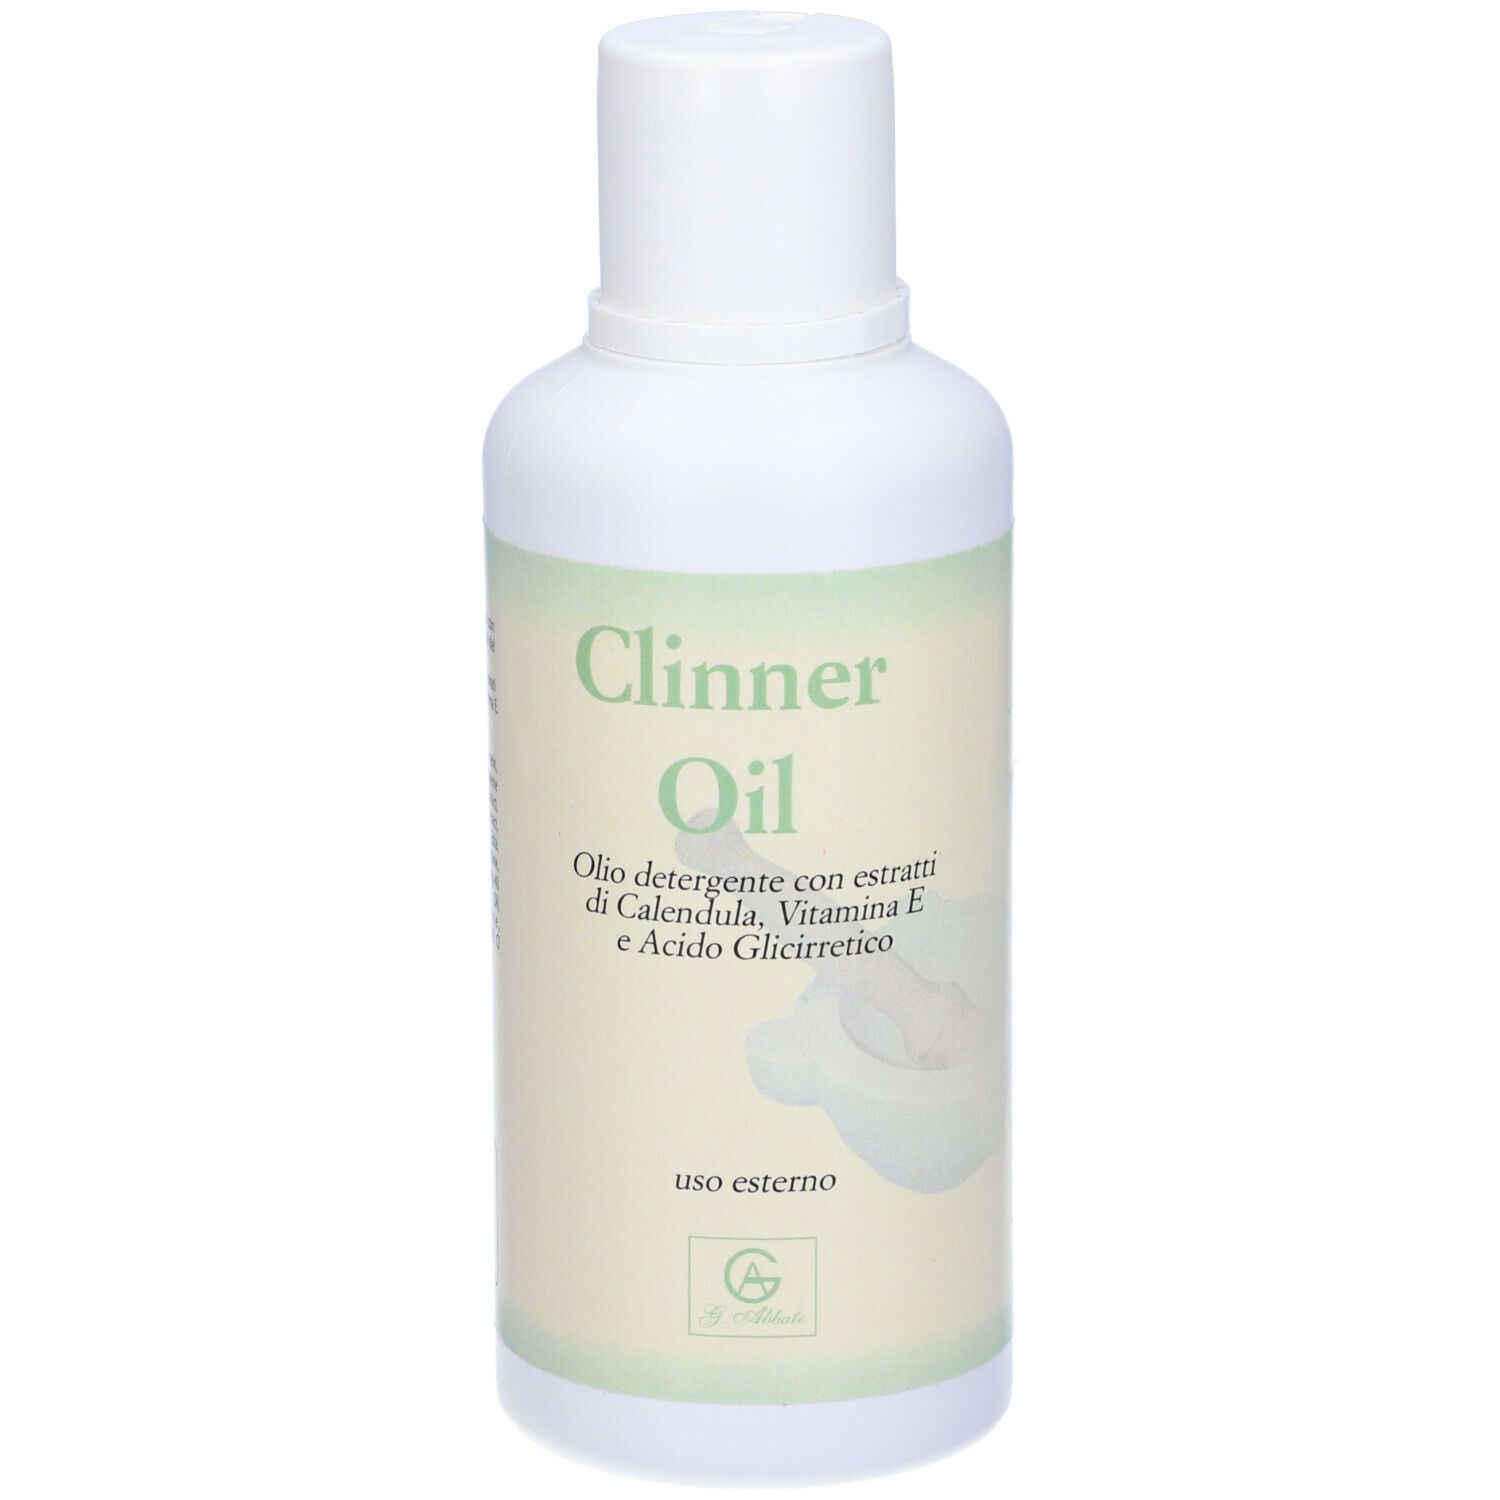 Image of Clinner Olio Detergente